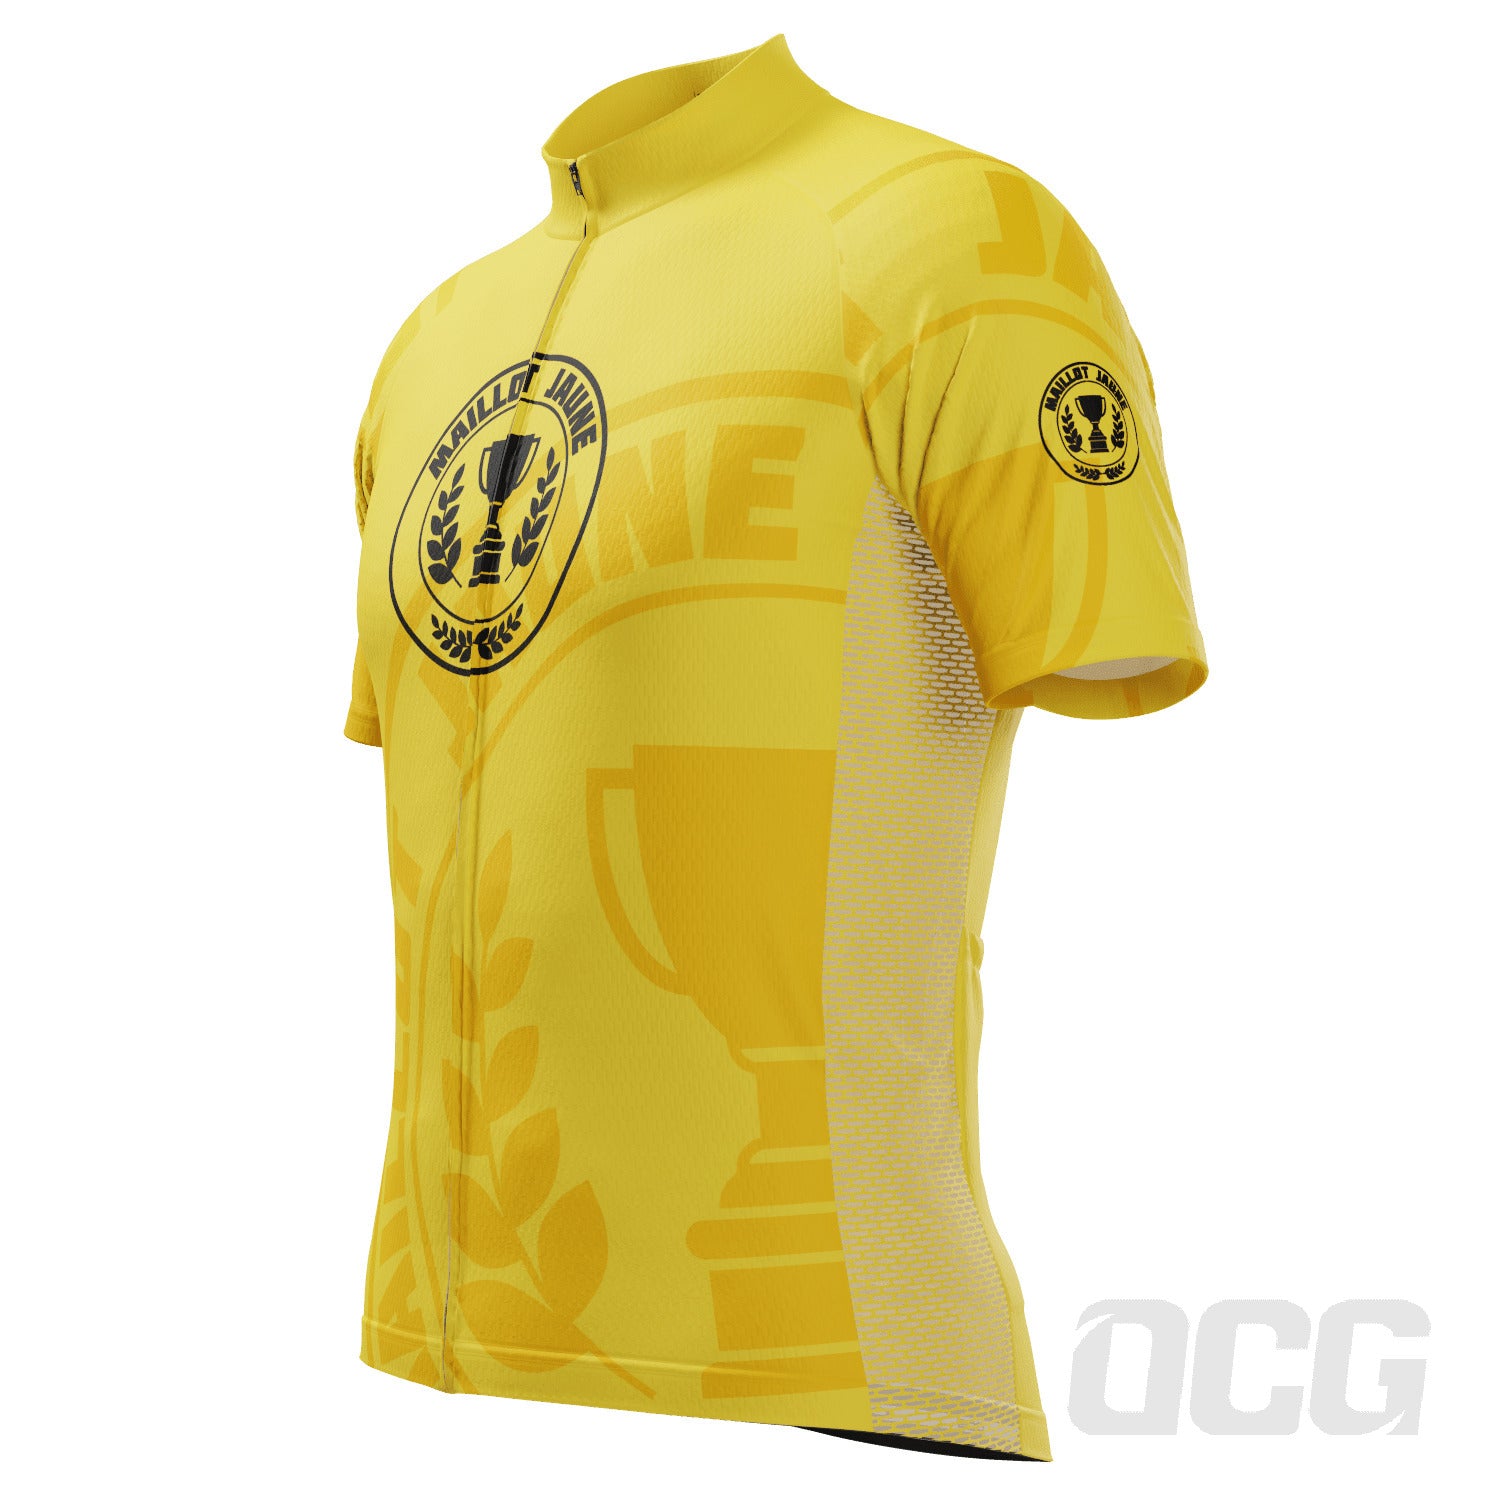 Men's Tour de France Yellow Leaders Maillot Jaune Short Sleeve Cycling Jersey